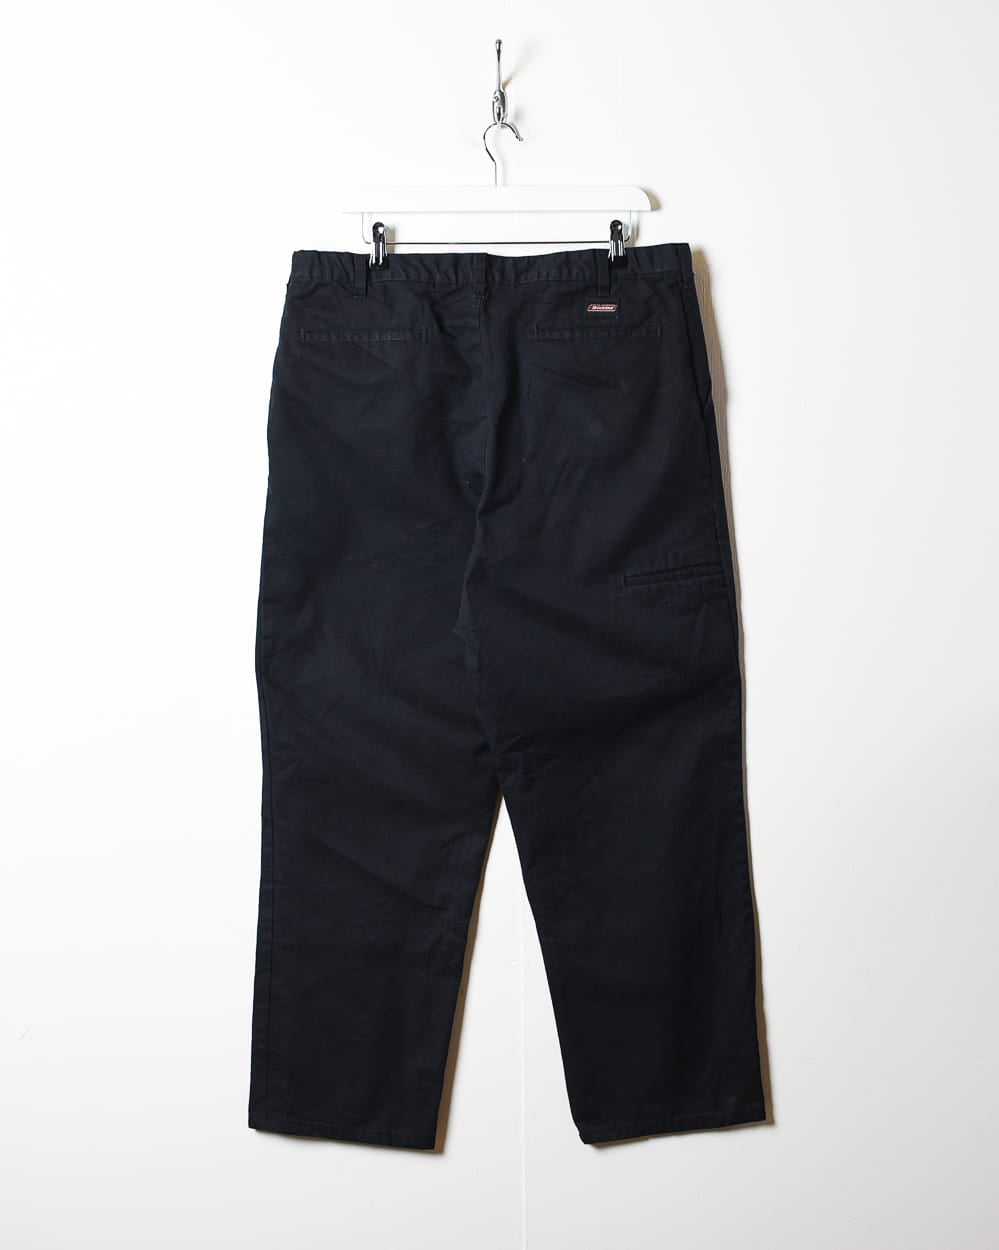 Black Dickies Trousers - W39 L29